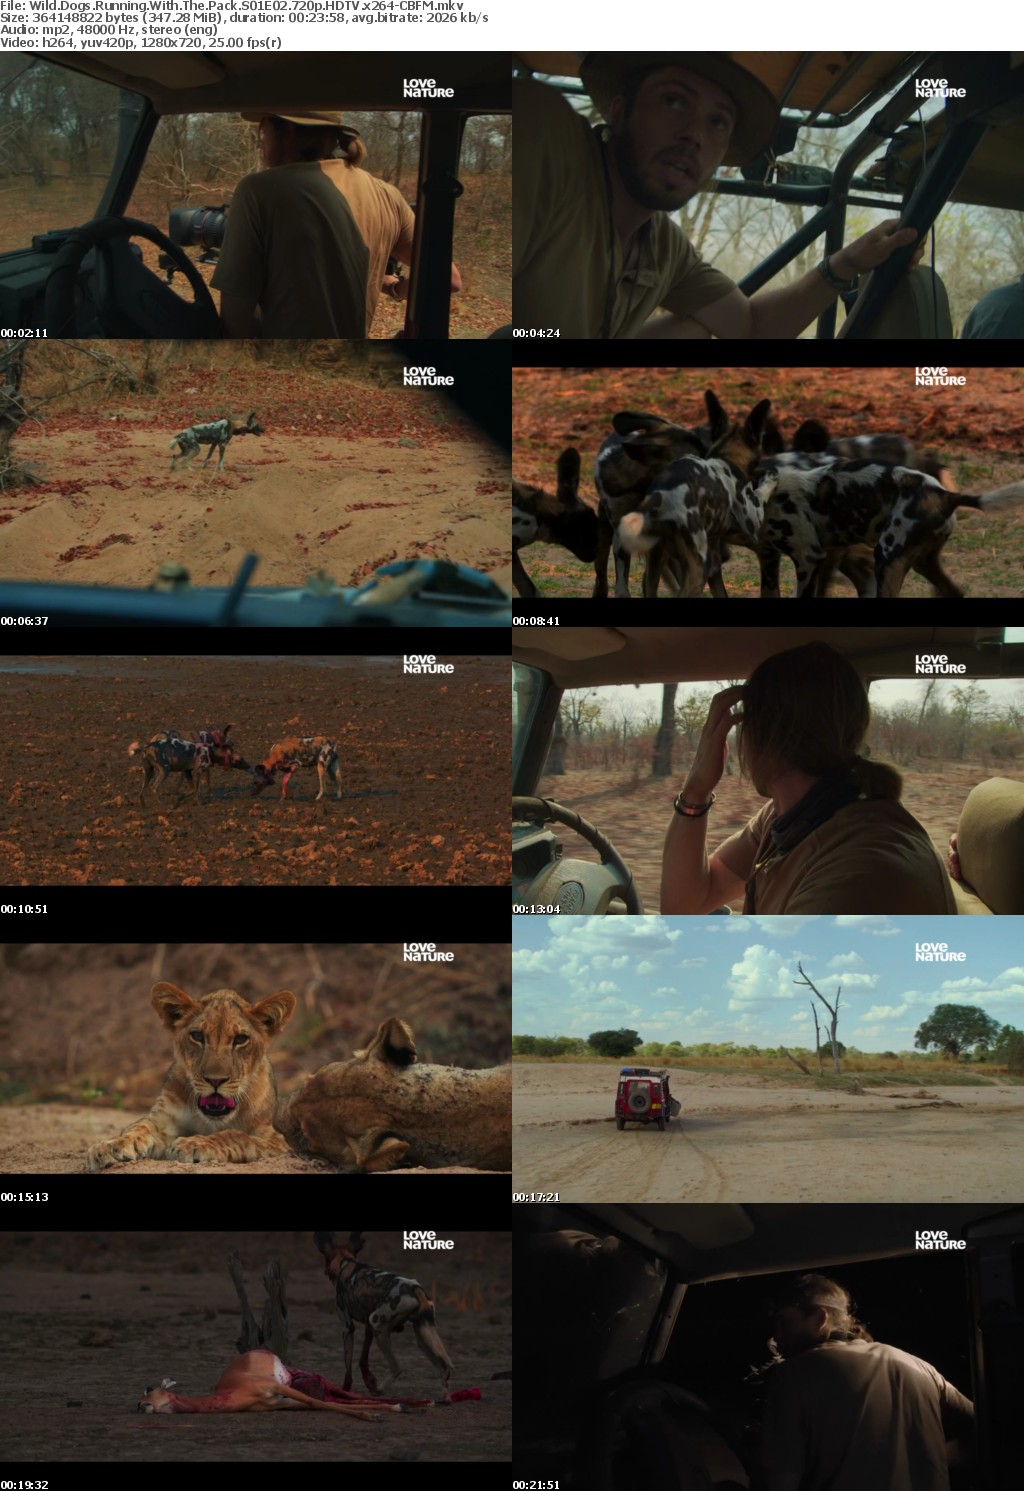 Wild Dogs Running With The Pack S01E02 720p HDTV x264-CBFM